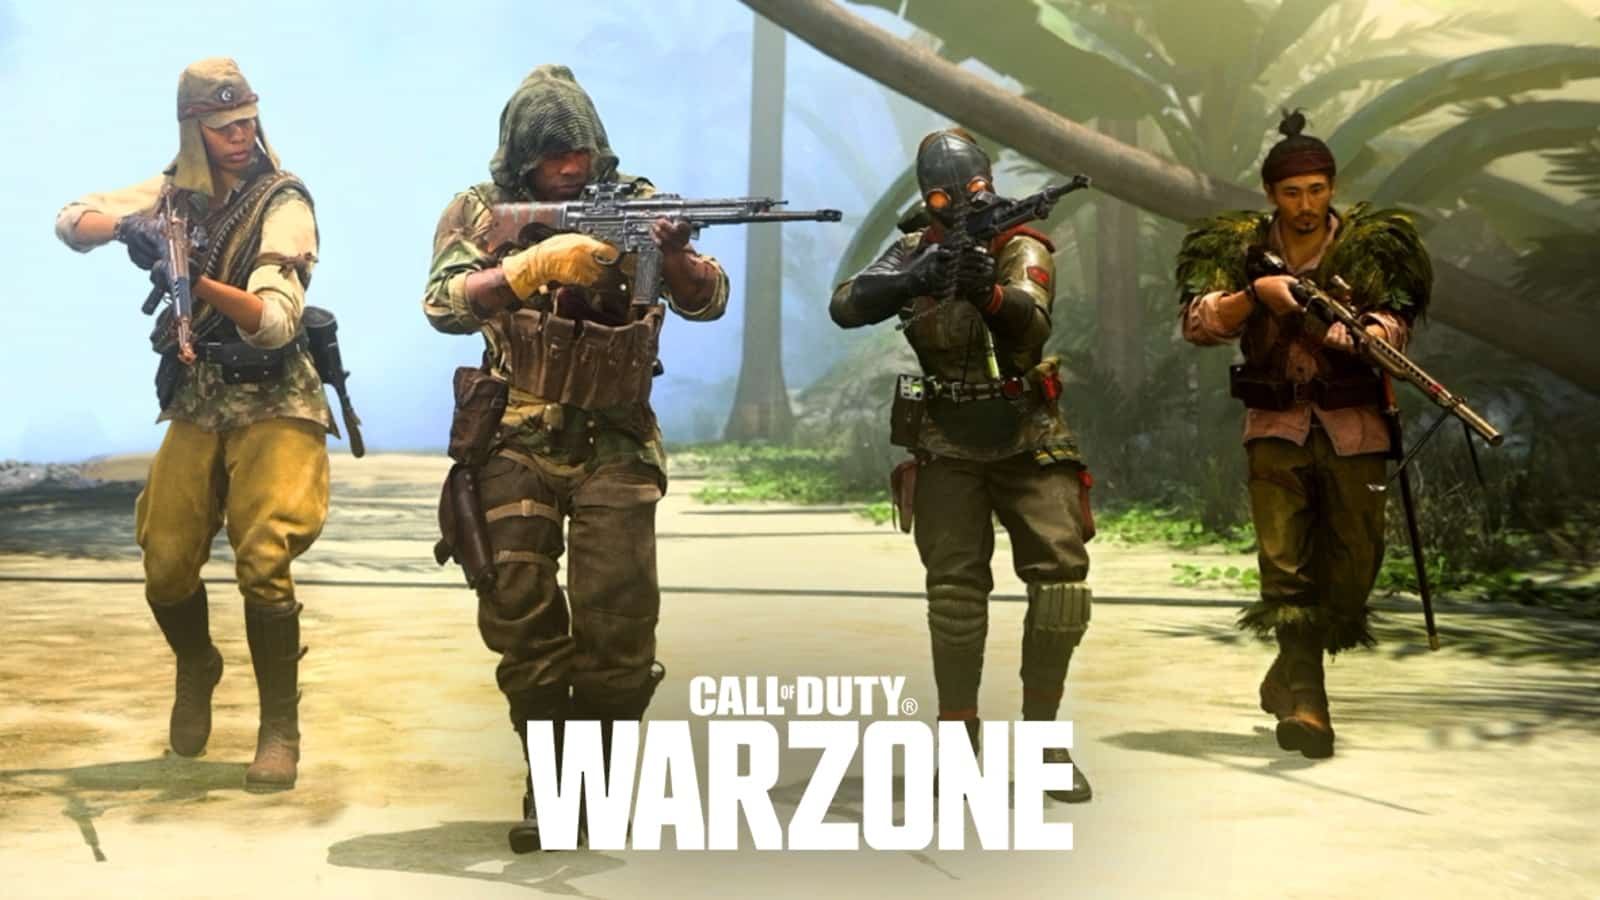 warzone 4 man lobby with warzone logo at bottom